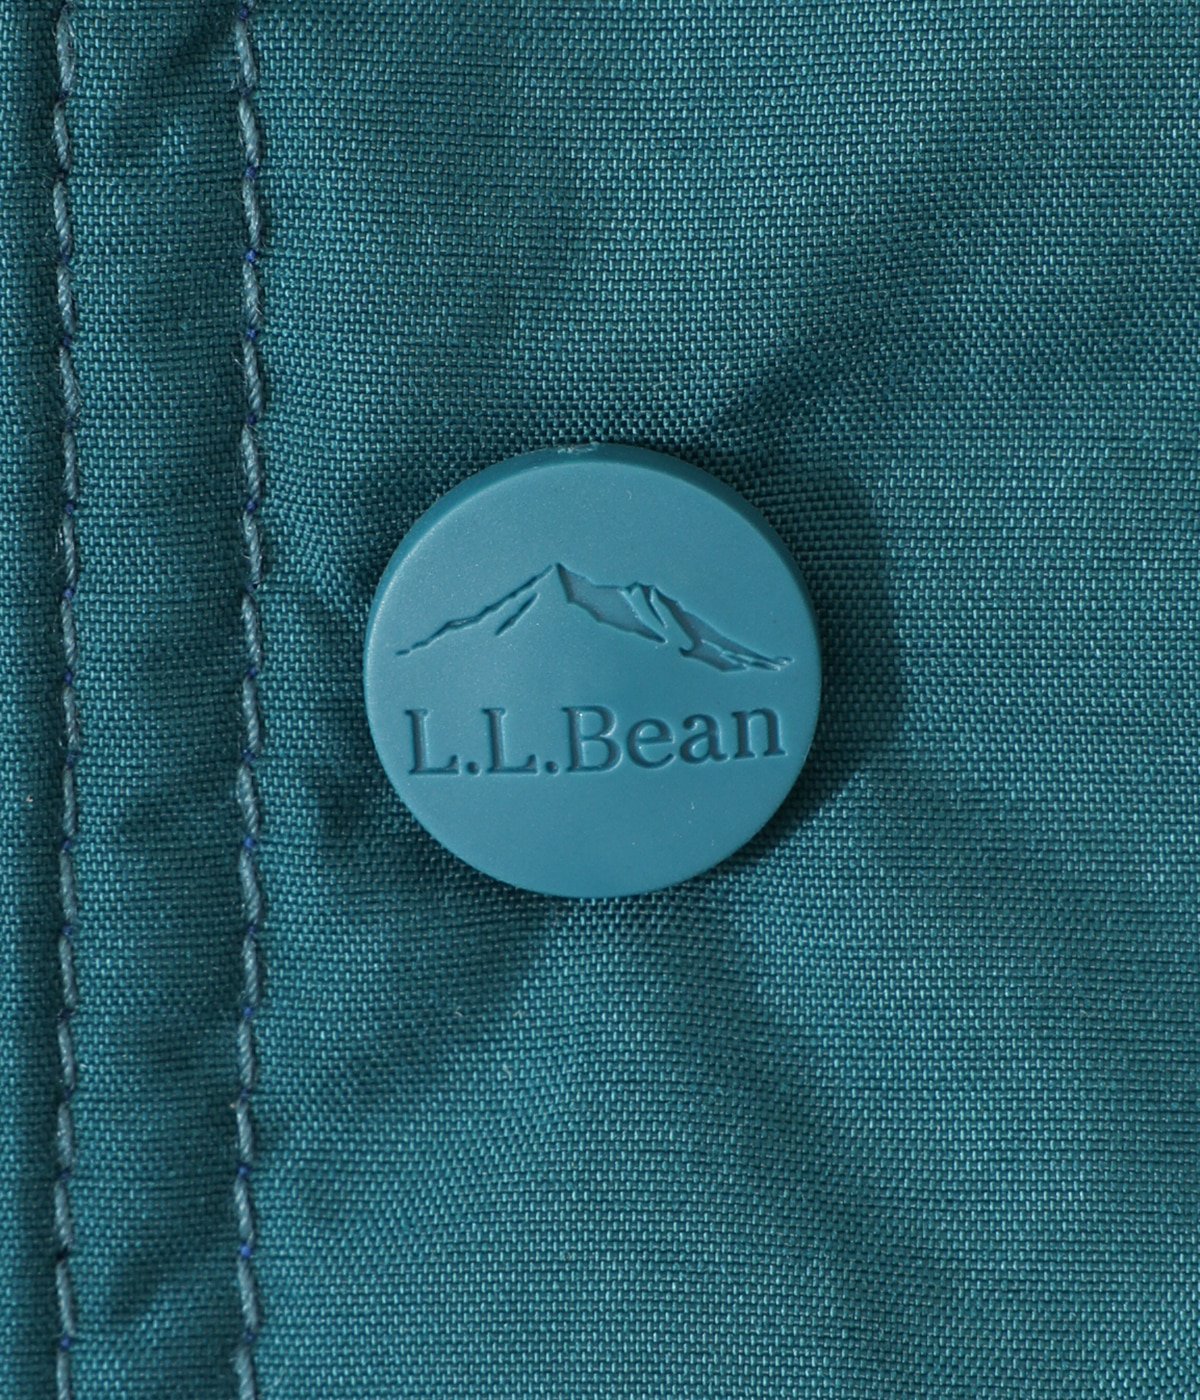 Bean’s Windy Ridge Jacket